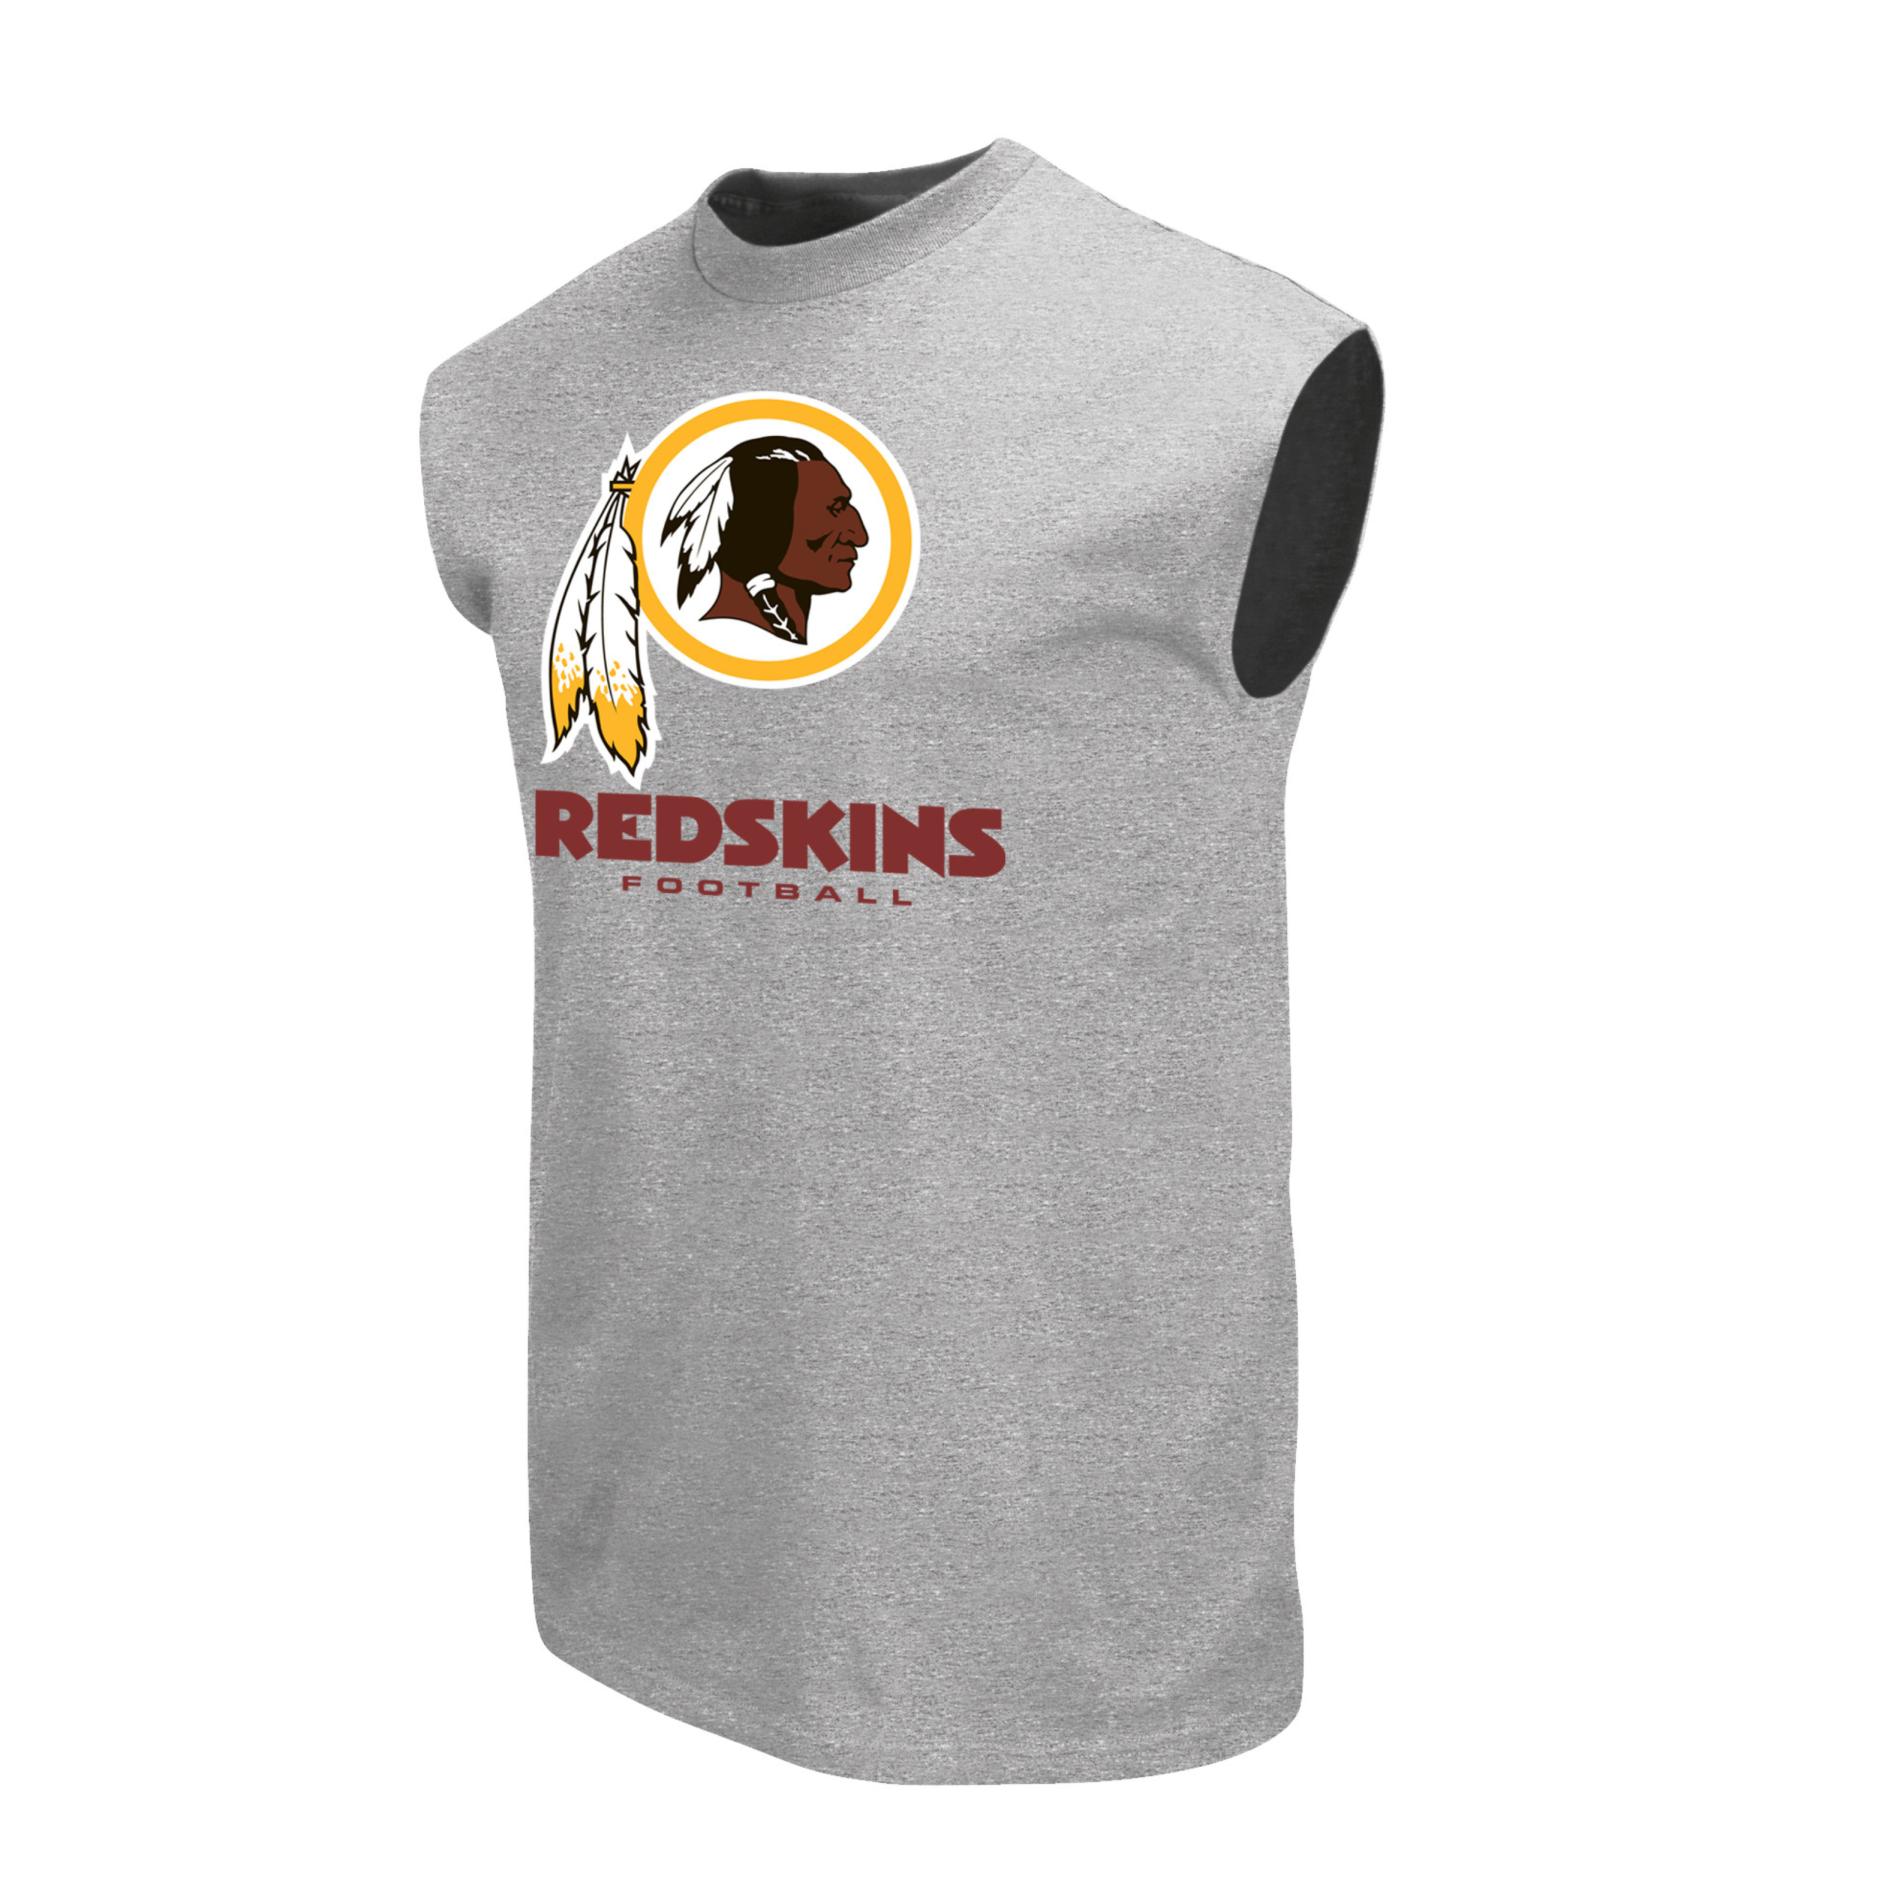 NFL Men's Muscle Shirt - Washington Redskins